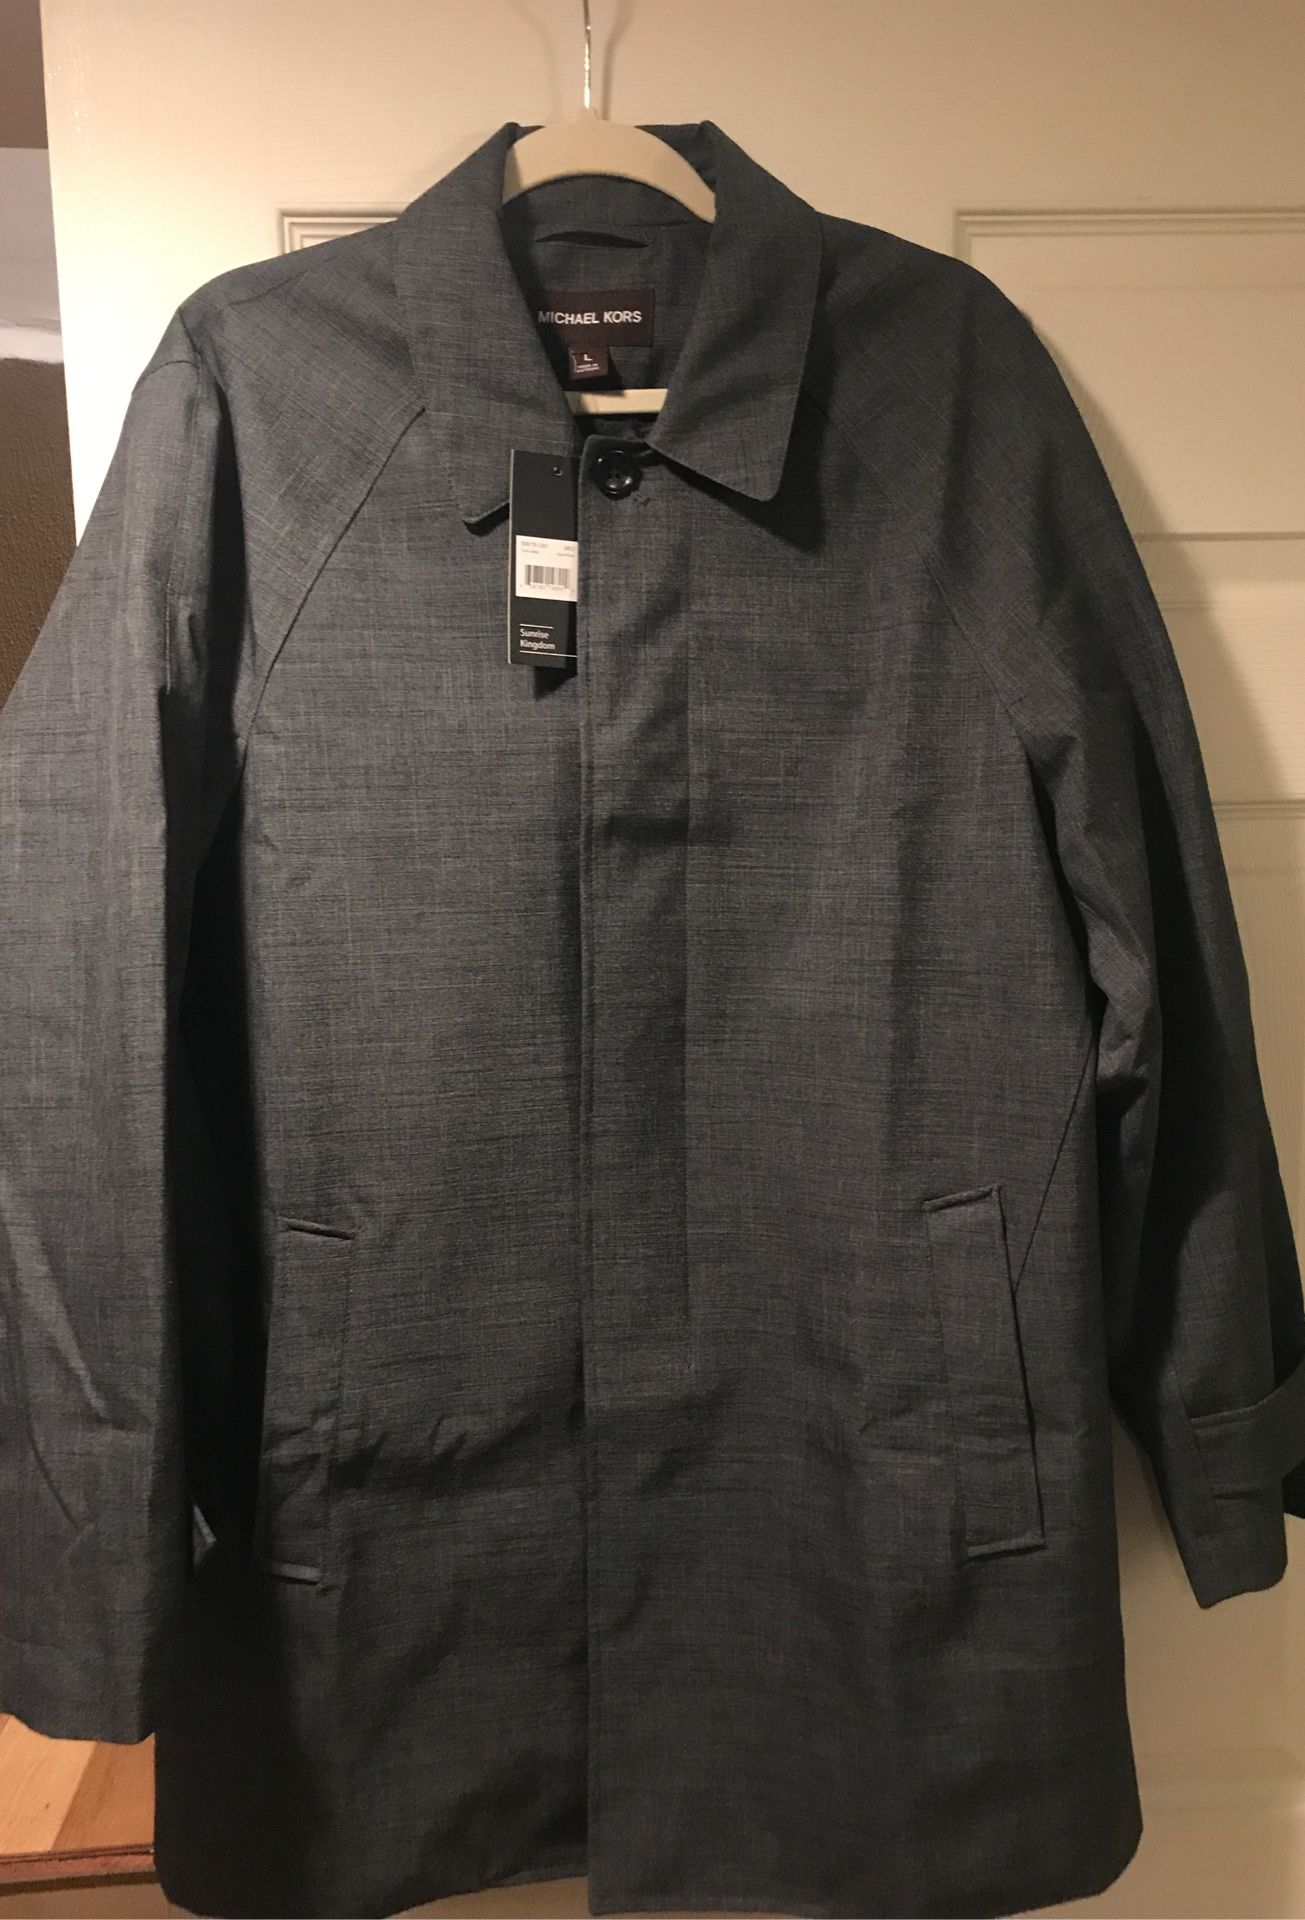 Michael Kors trench coat size L